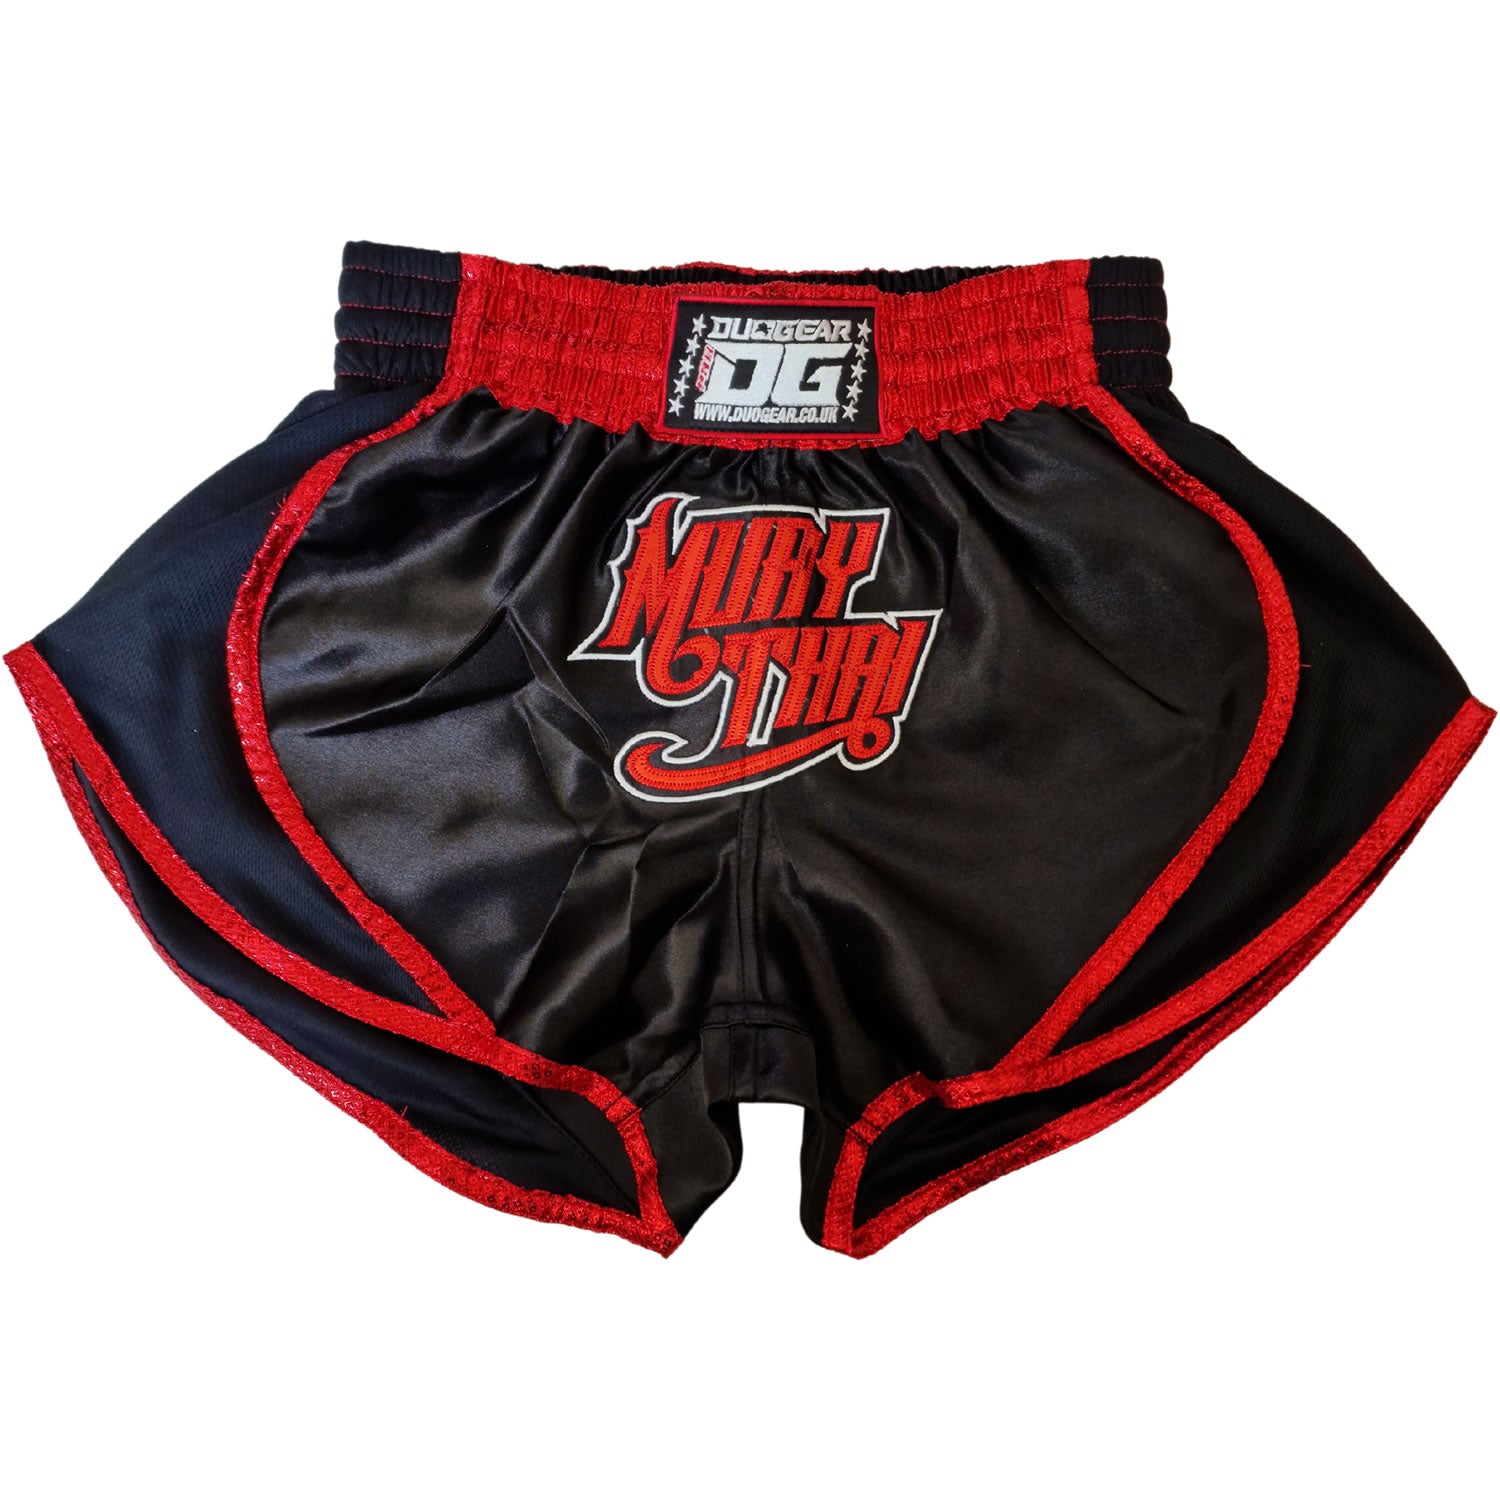 DUO GEAR | Muay Thai Shorts | BLACK RED RETRO 22 MUAY THAI SHORTS